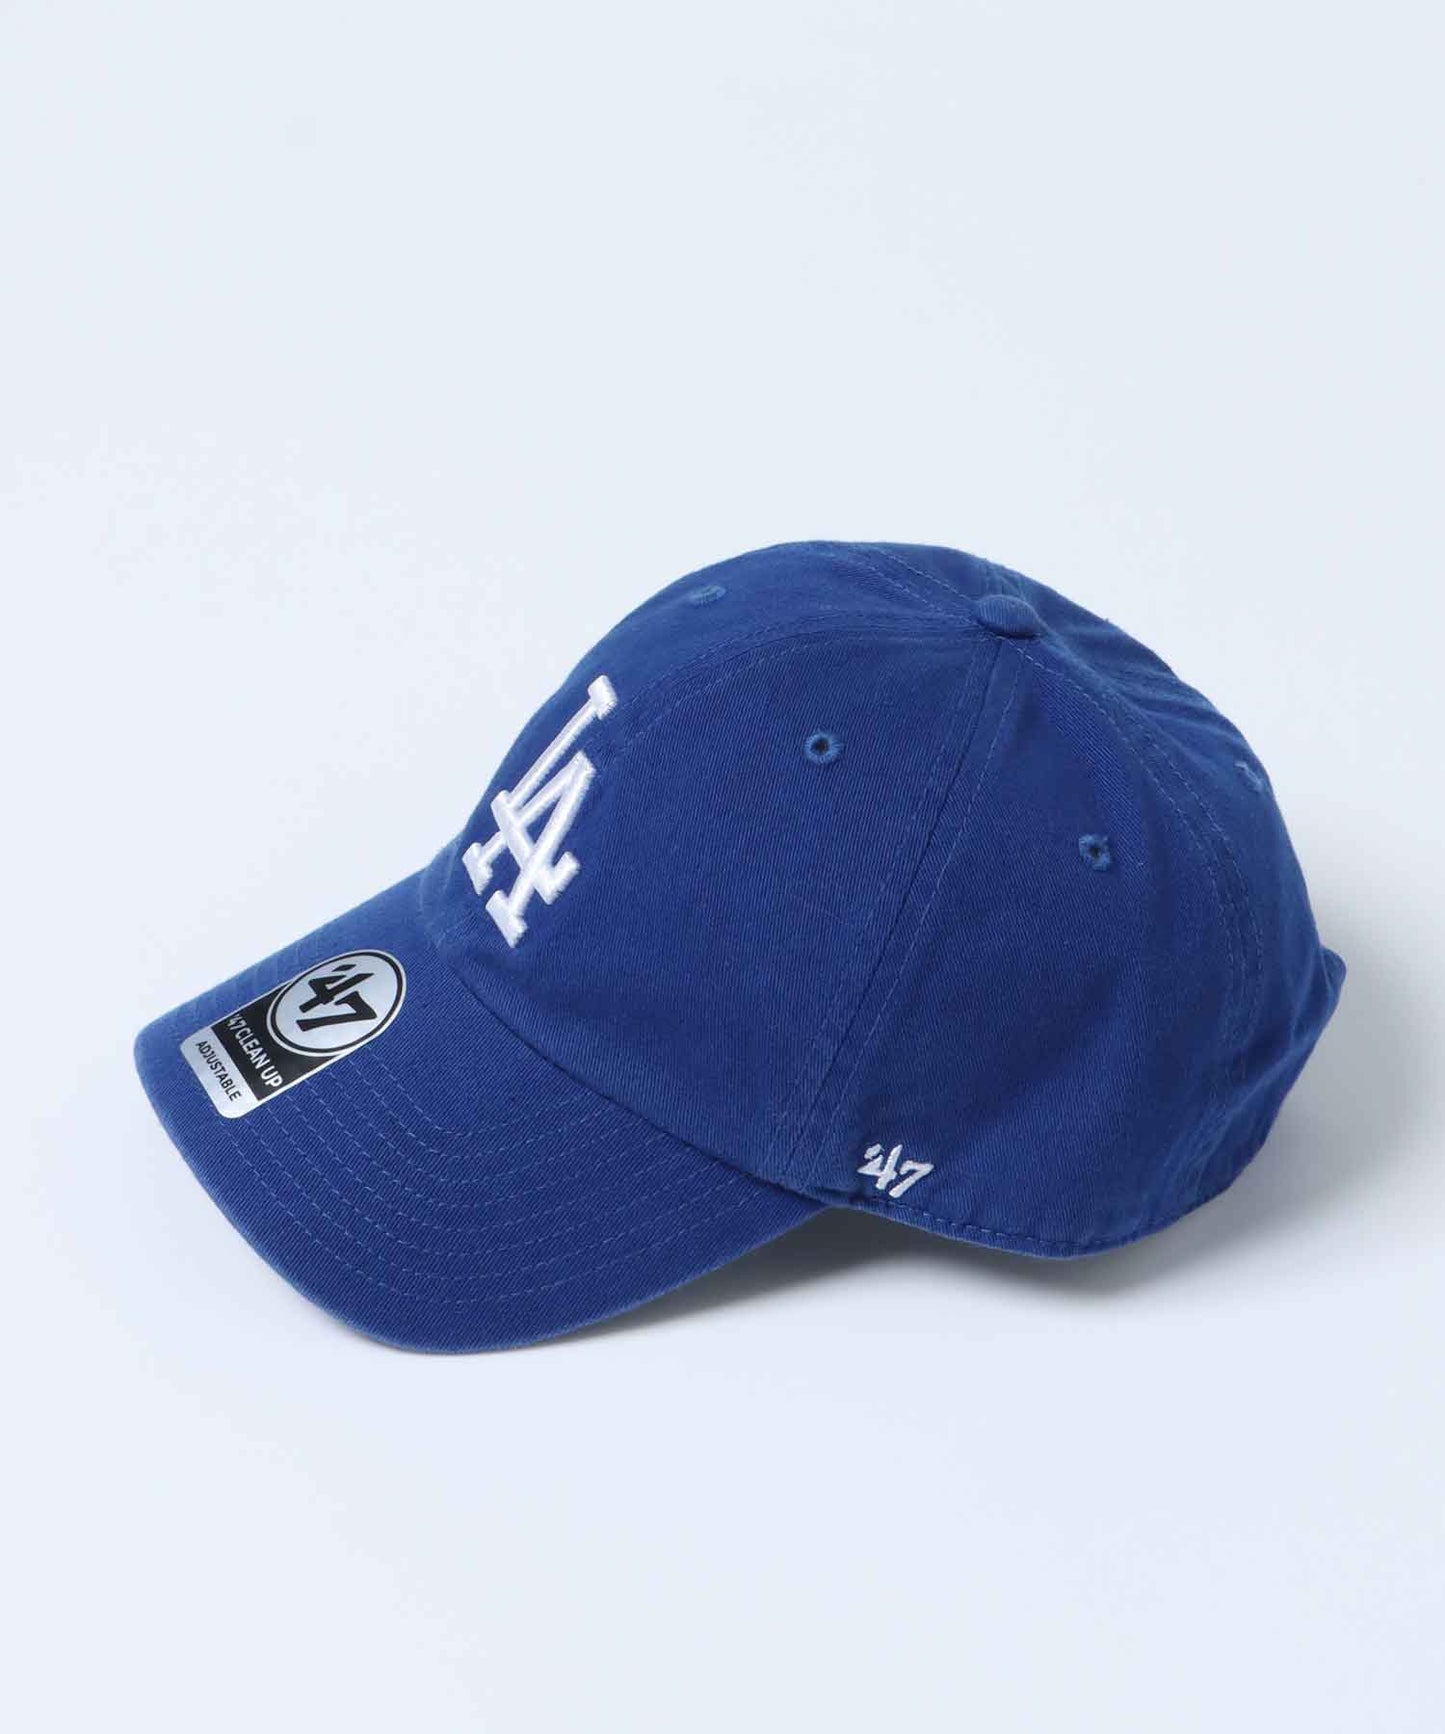 Dodgers '47 CLEAN UP / ドジャース  ロサンゼルス クリーンナップ キャップ ブルー